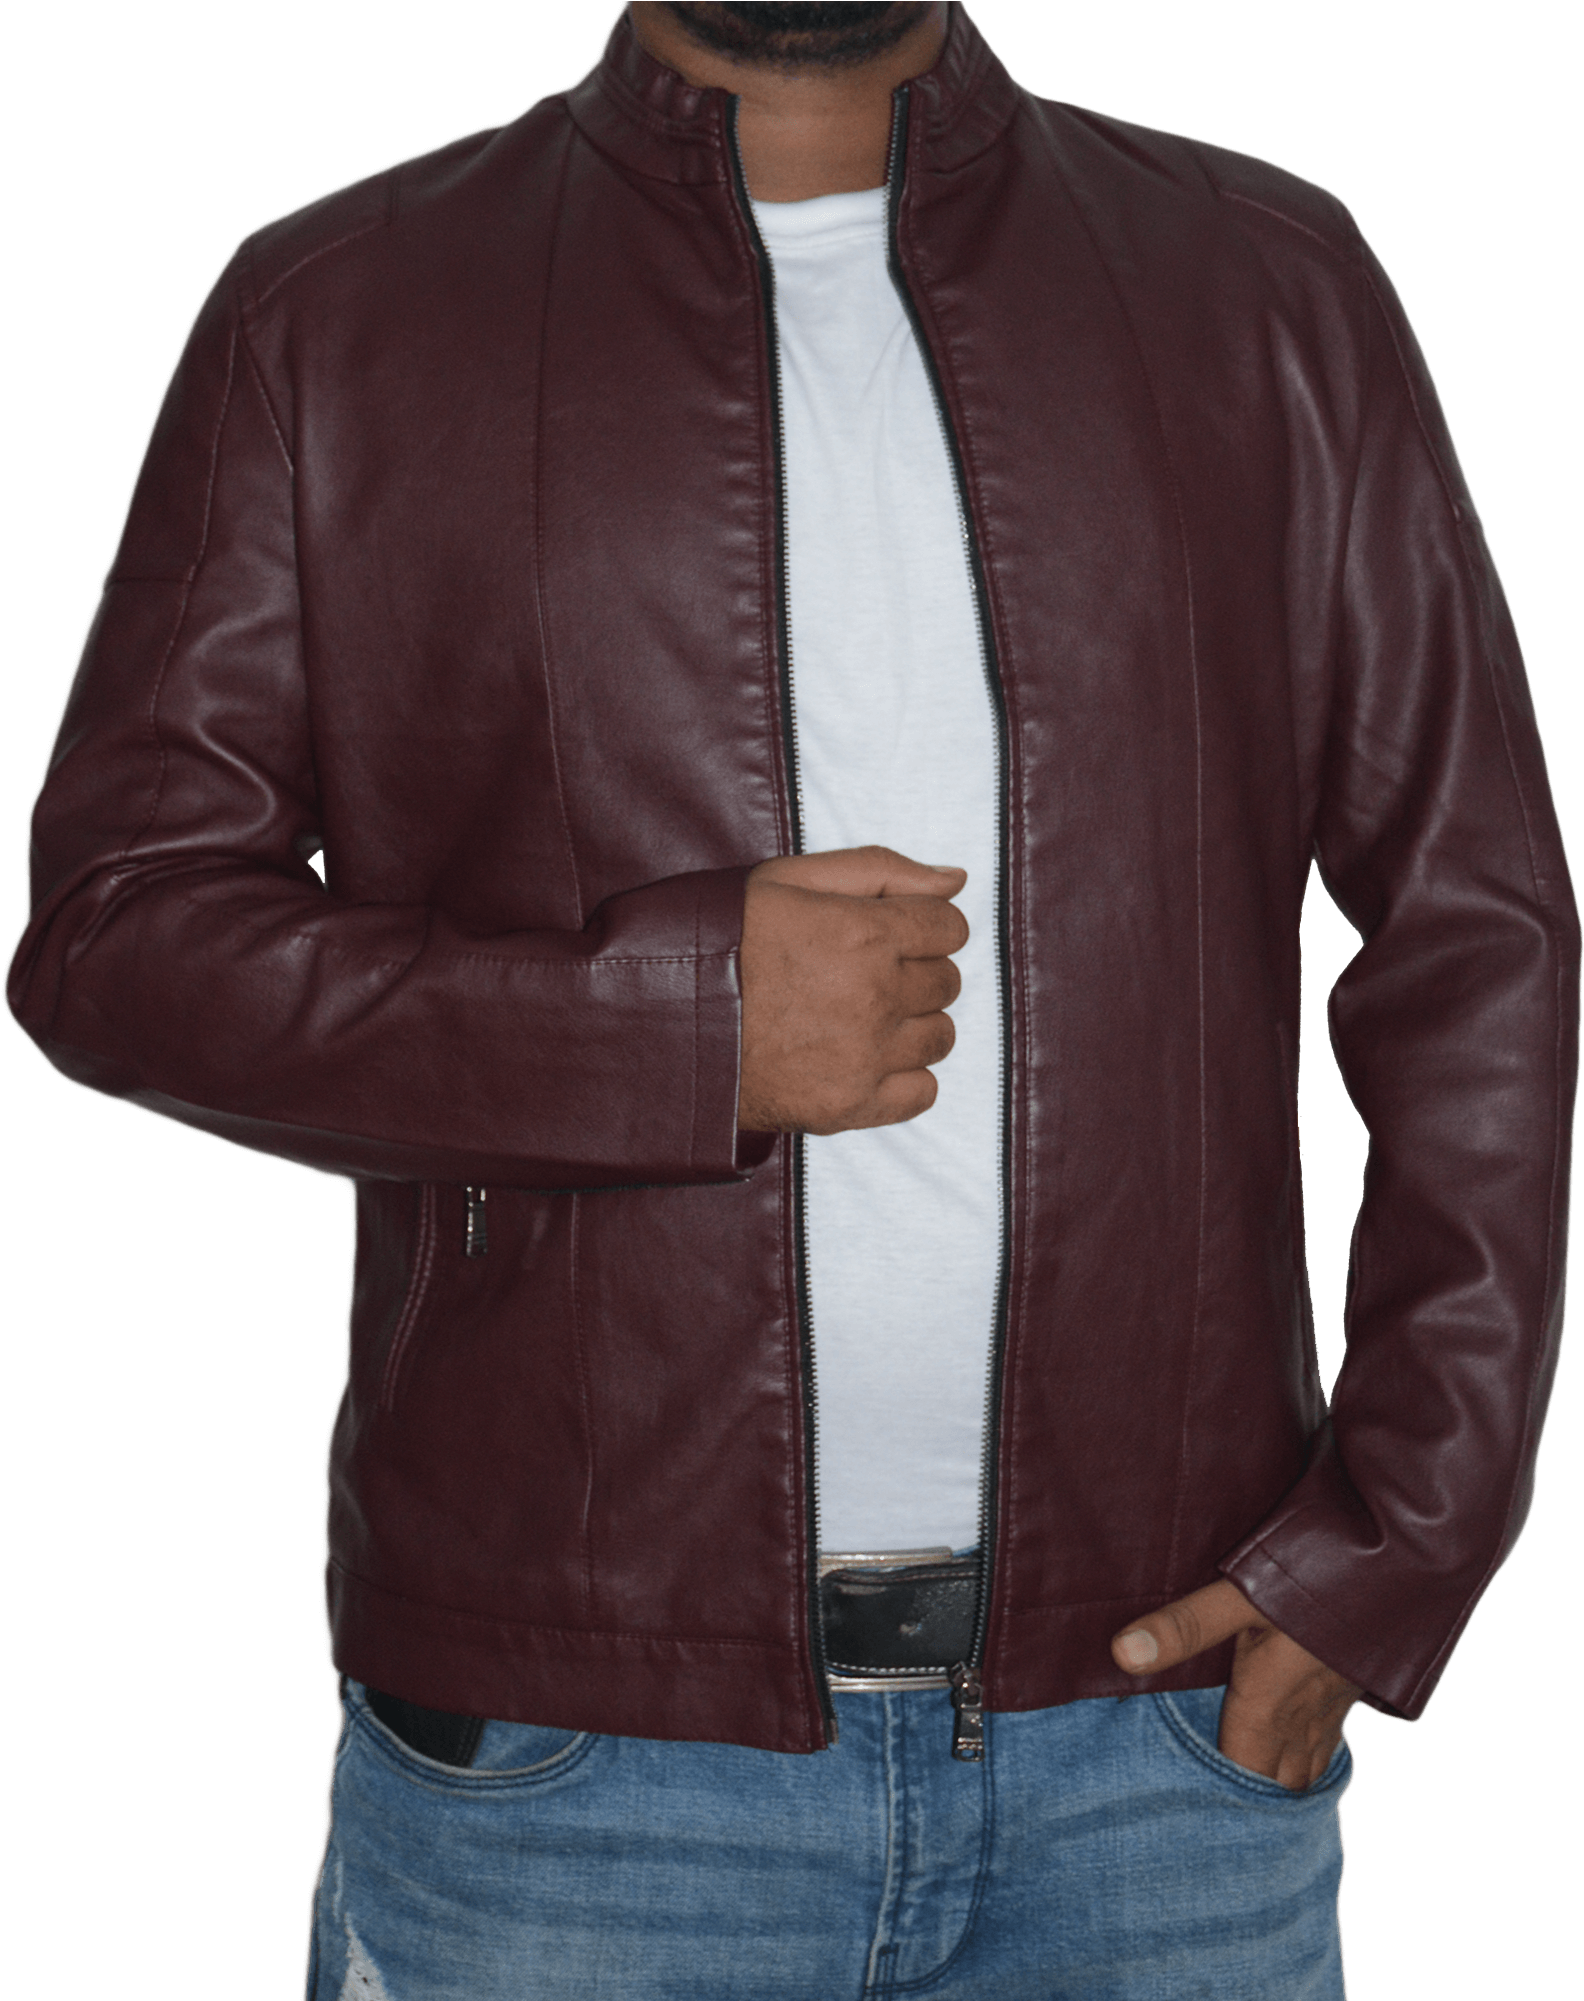 A Man Wearing A Leather Jacket